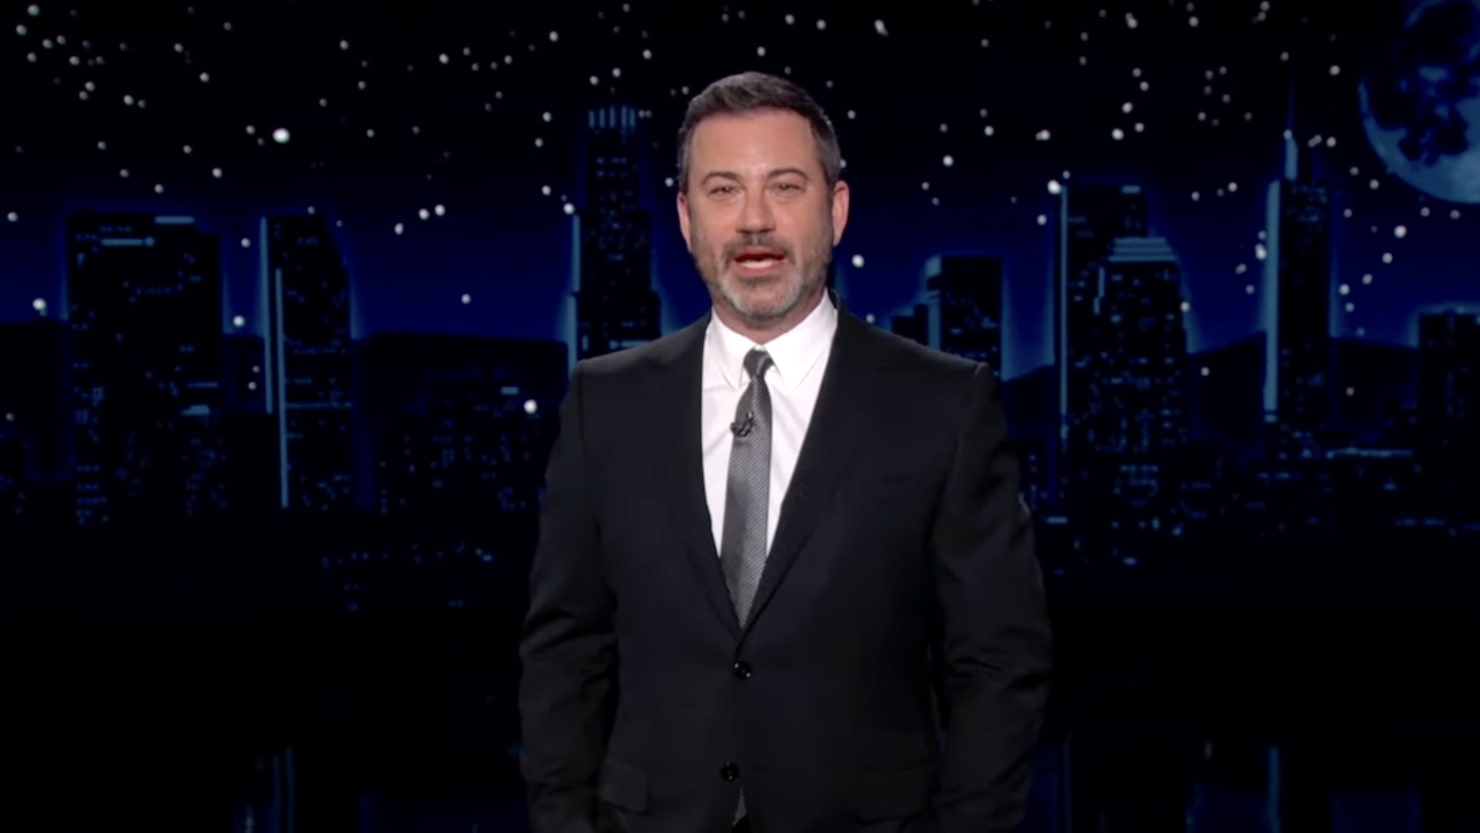 Jimmy Kimmel cheerfully mocks Trump’s wax figure being drilled